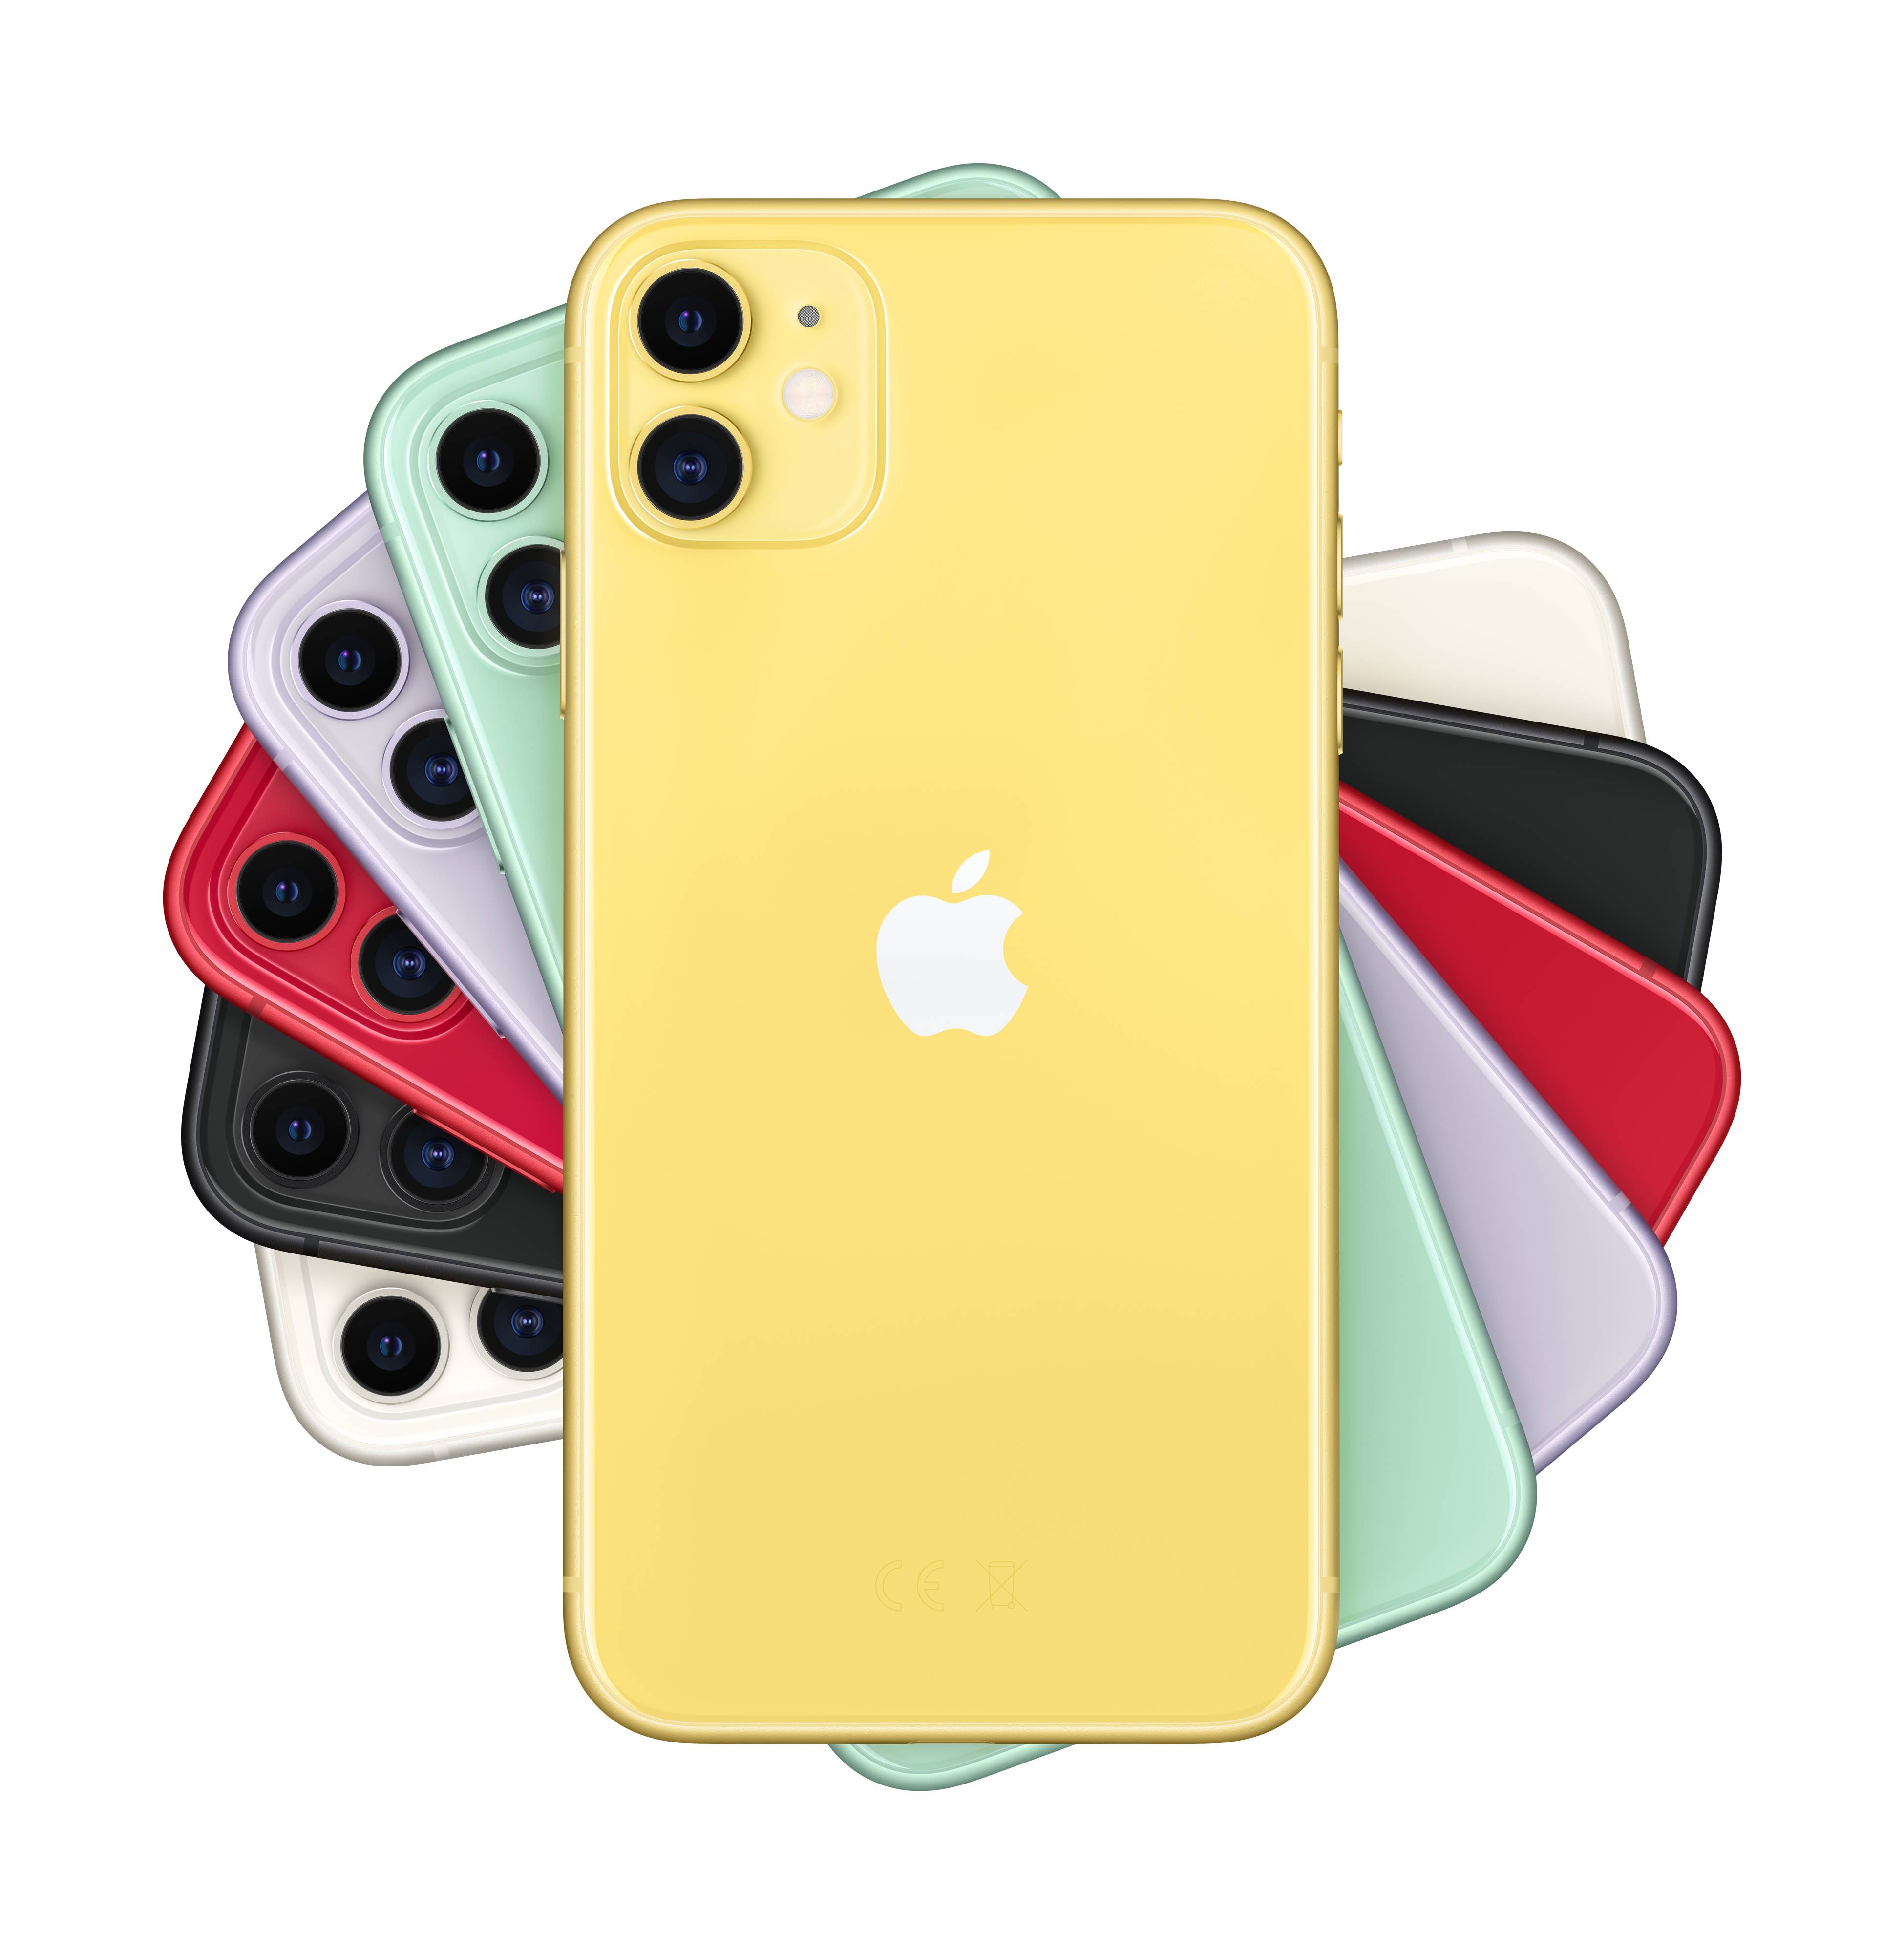 Apple iPhone 11 64GB Yellow (Verizon) MWLA2LL/A - Best Buy